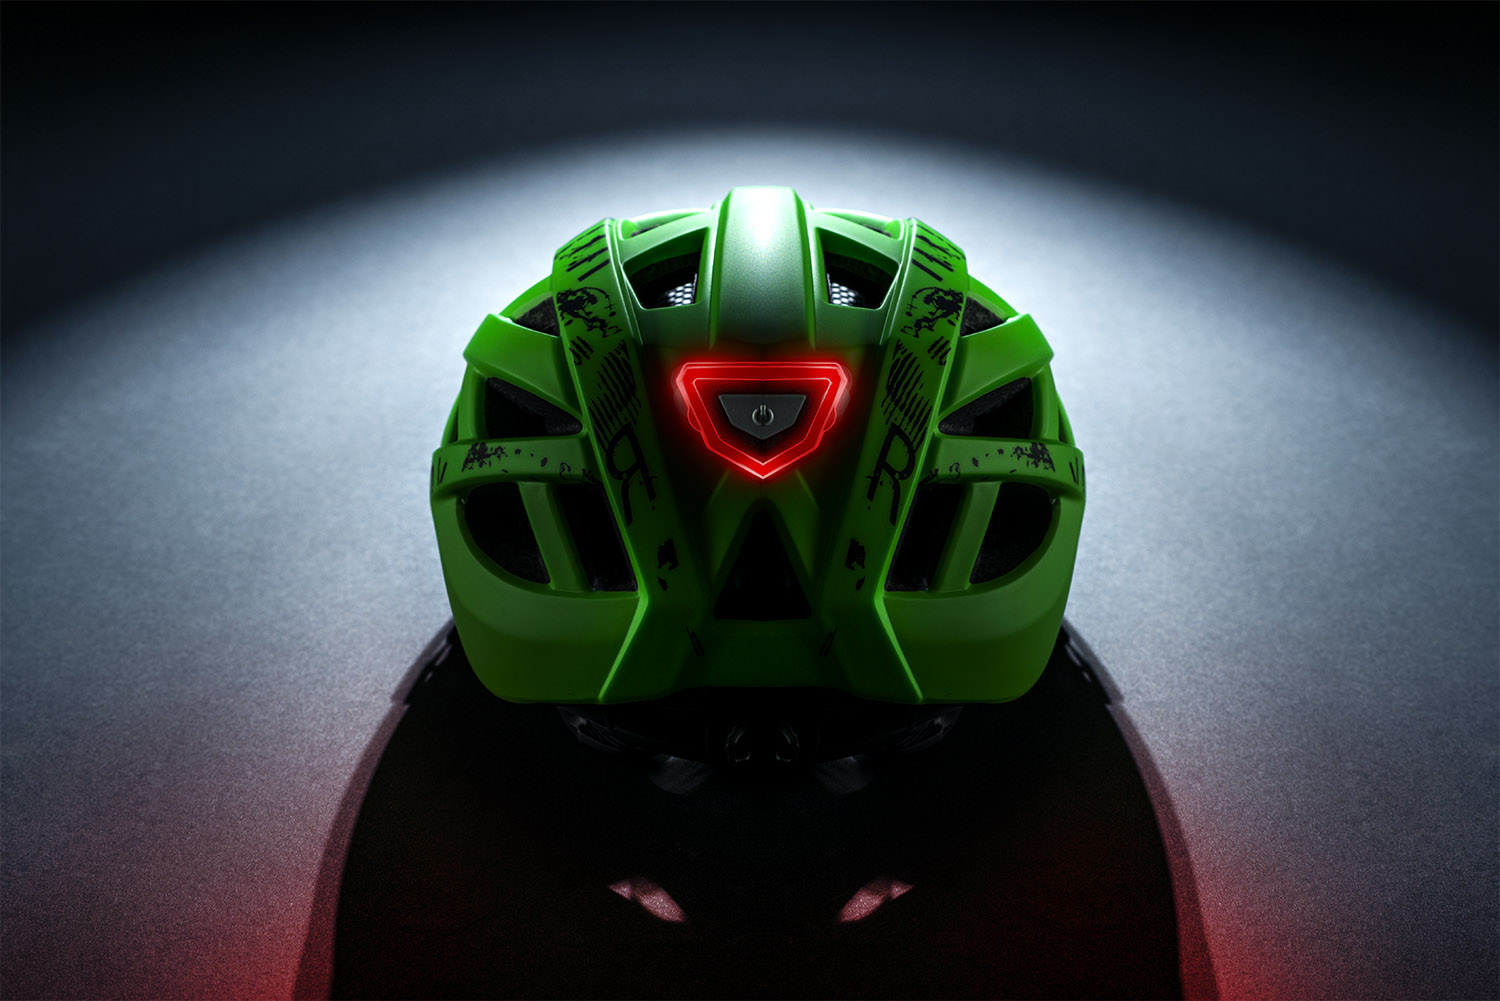 Náhradní světlo cyklistické helmy ATH18 a ATH20 na baterie. -